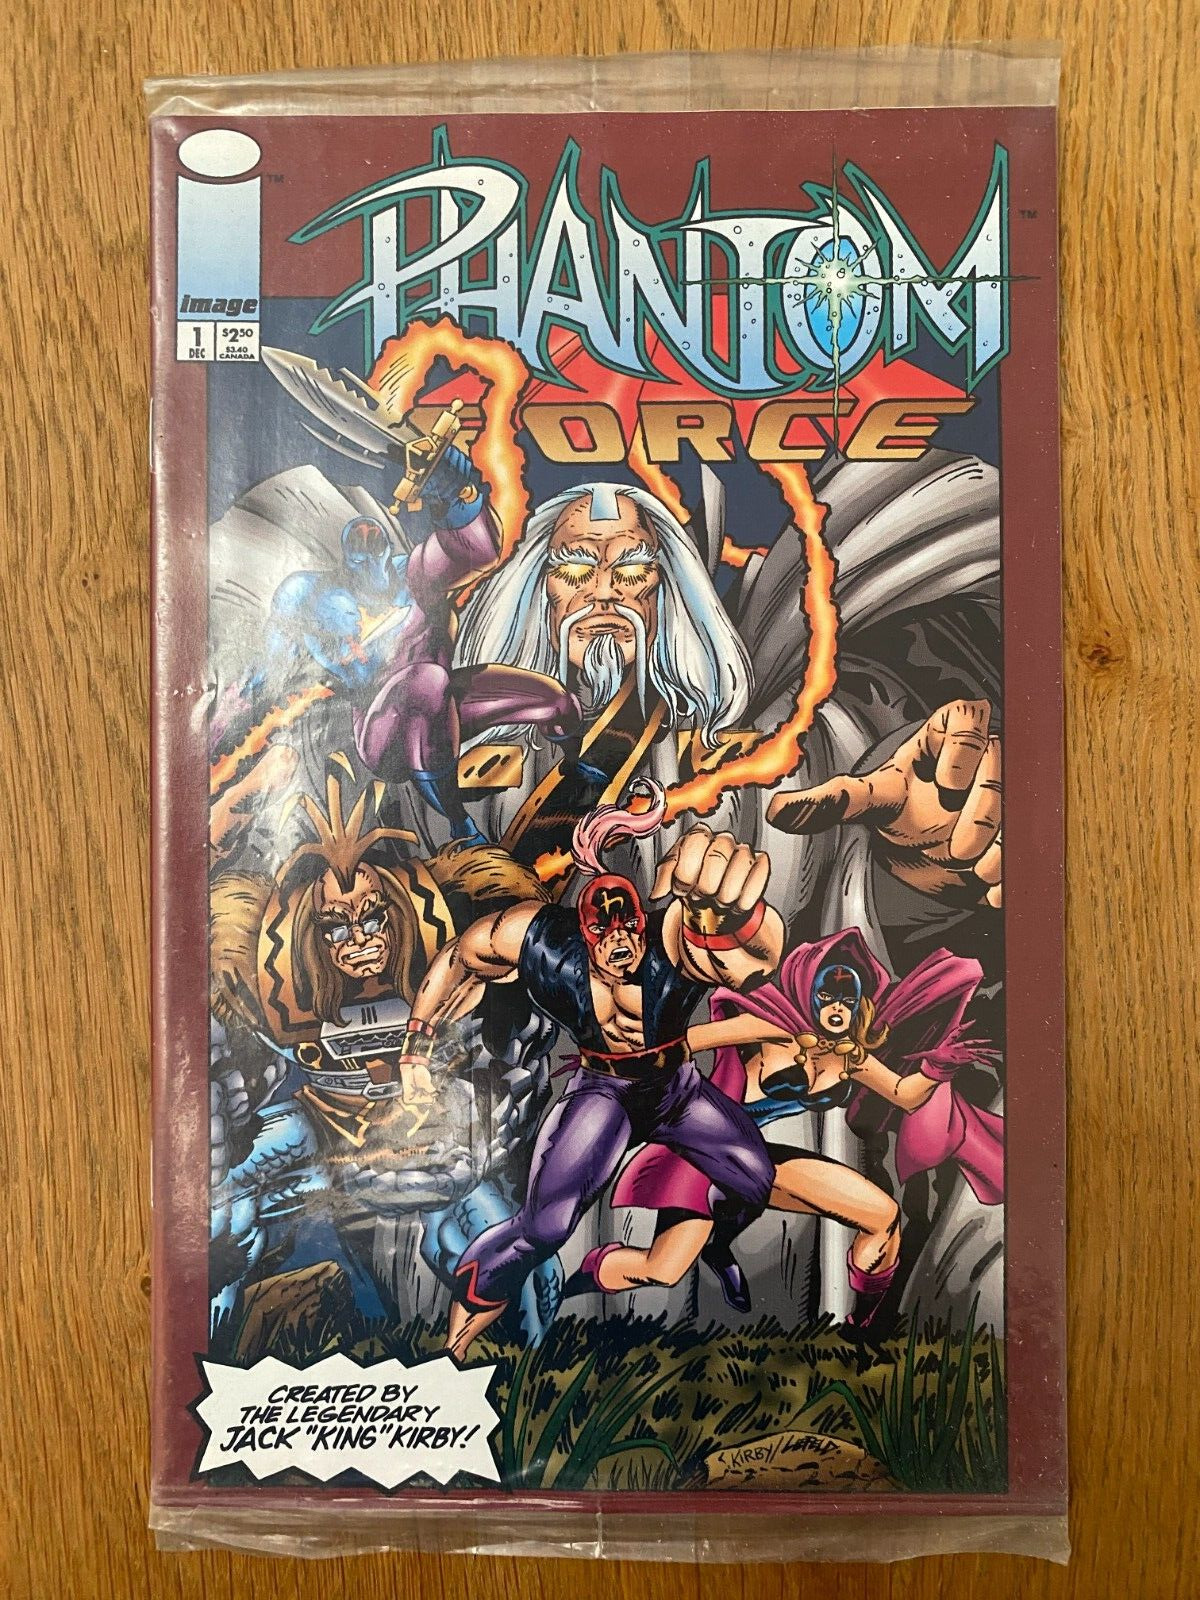 Phantom Force #1 (Image Comics, 1993) SEALED with Card